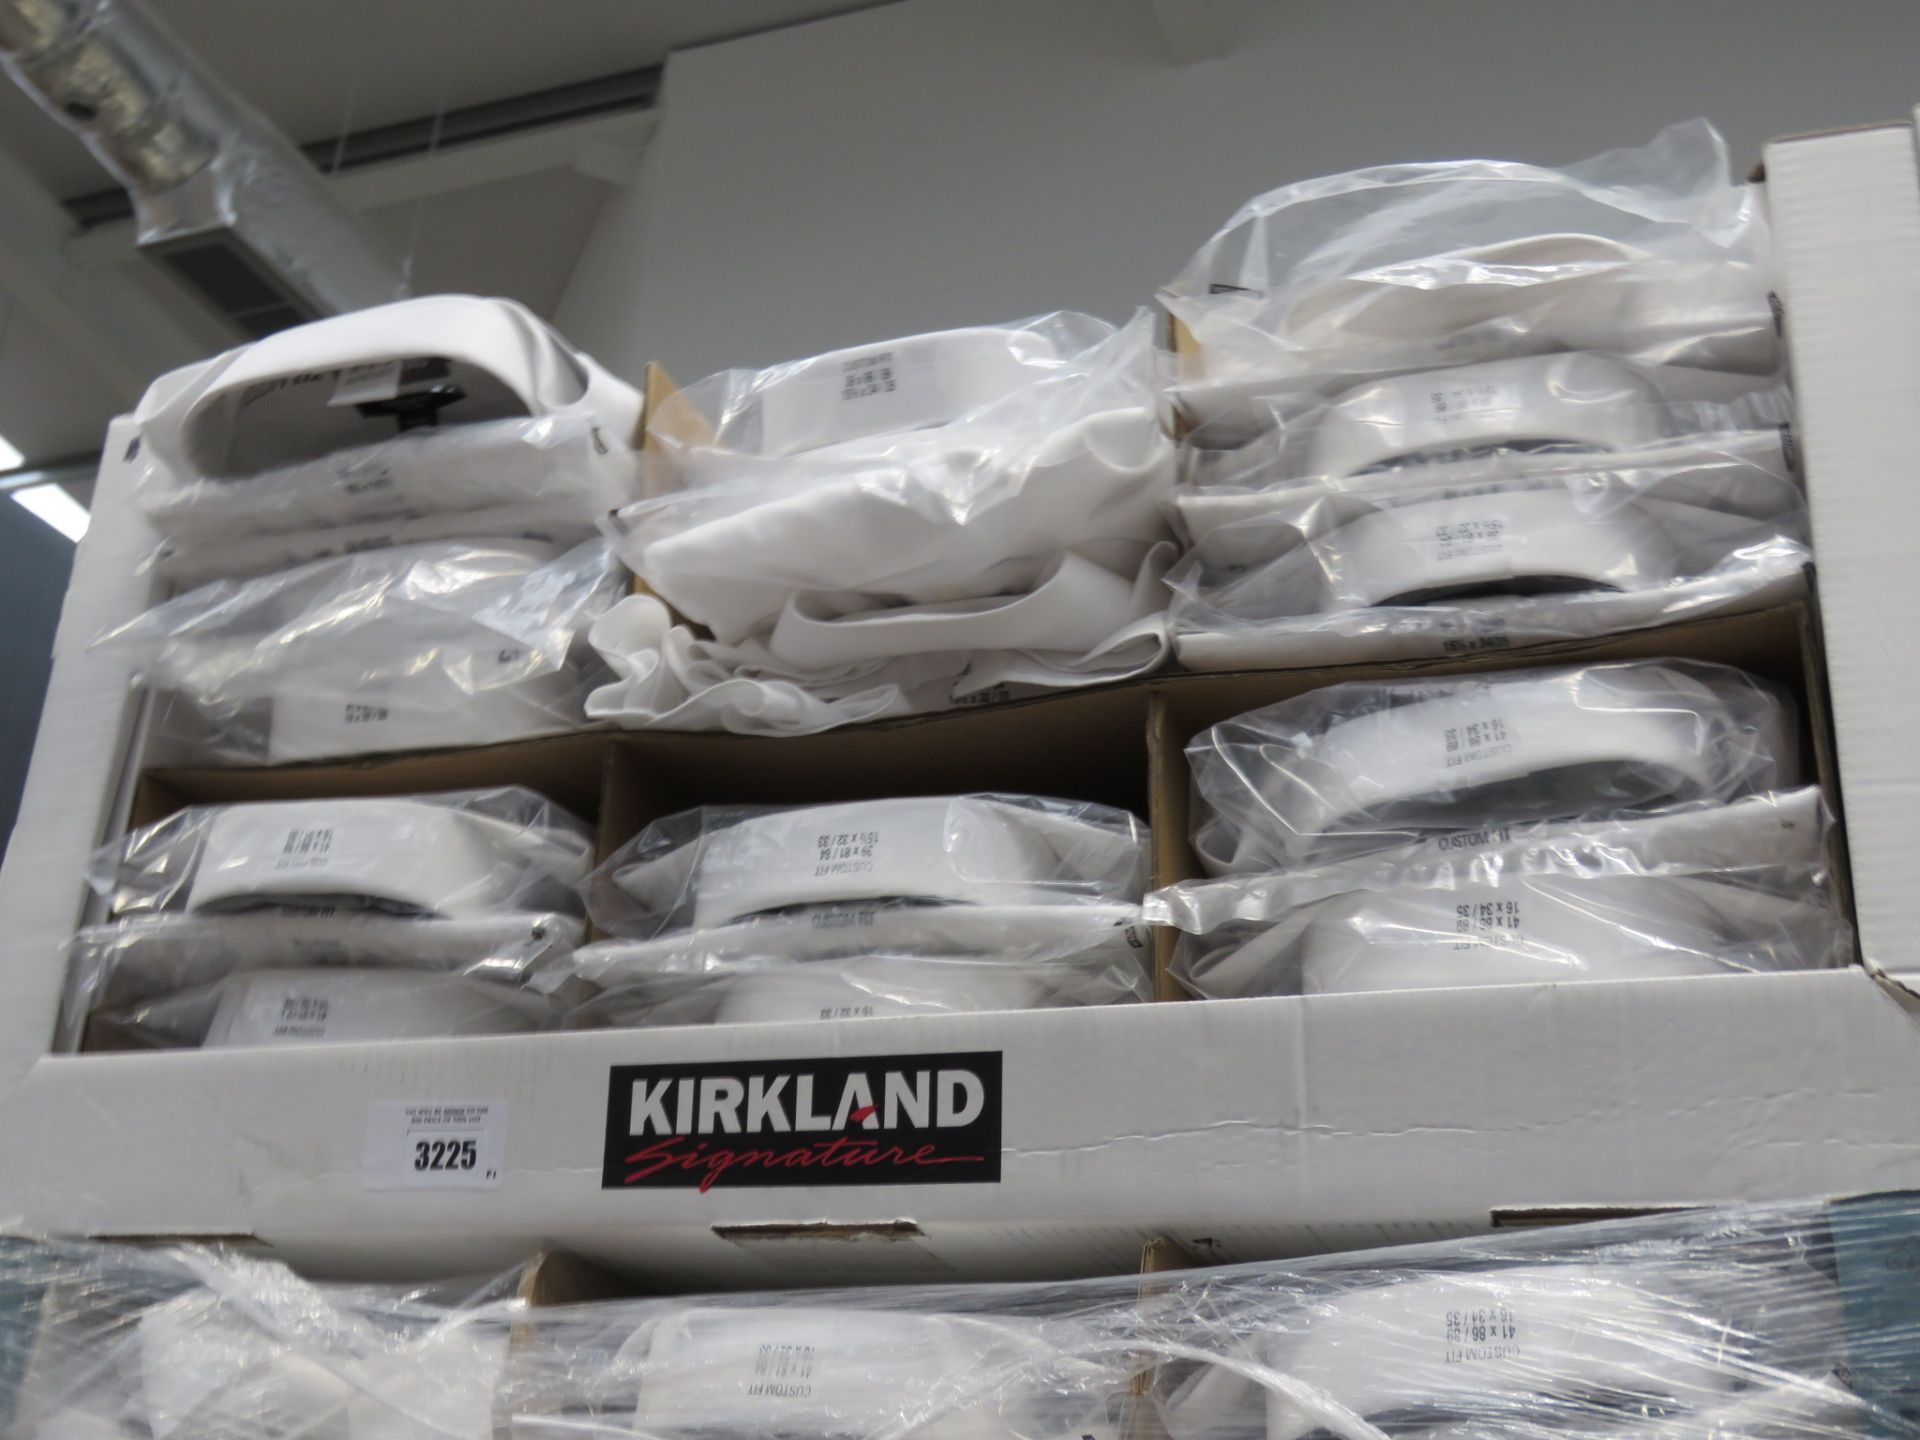 Tray containing gents Kirkland shirts